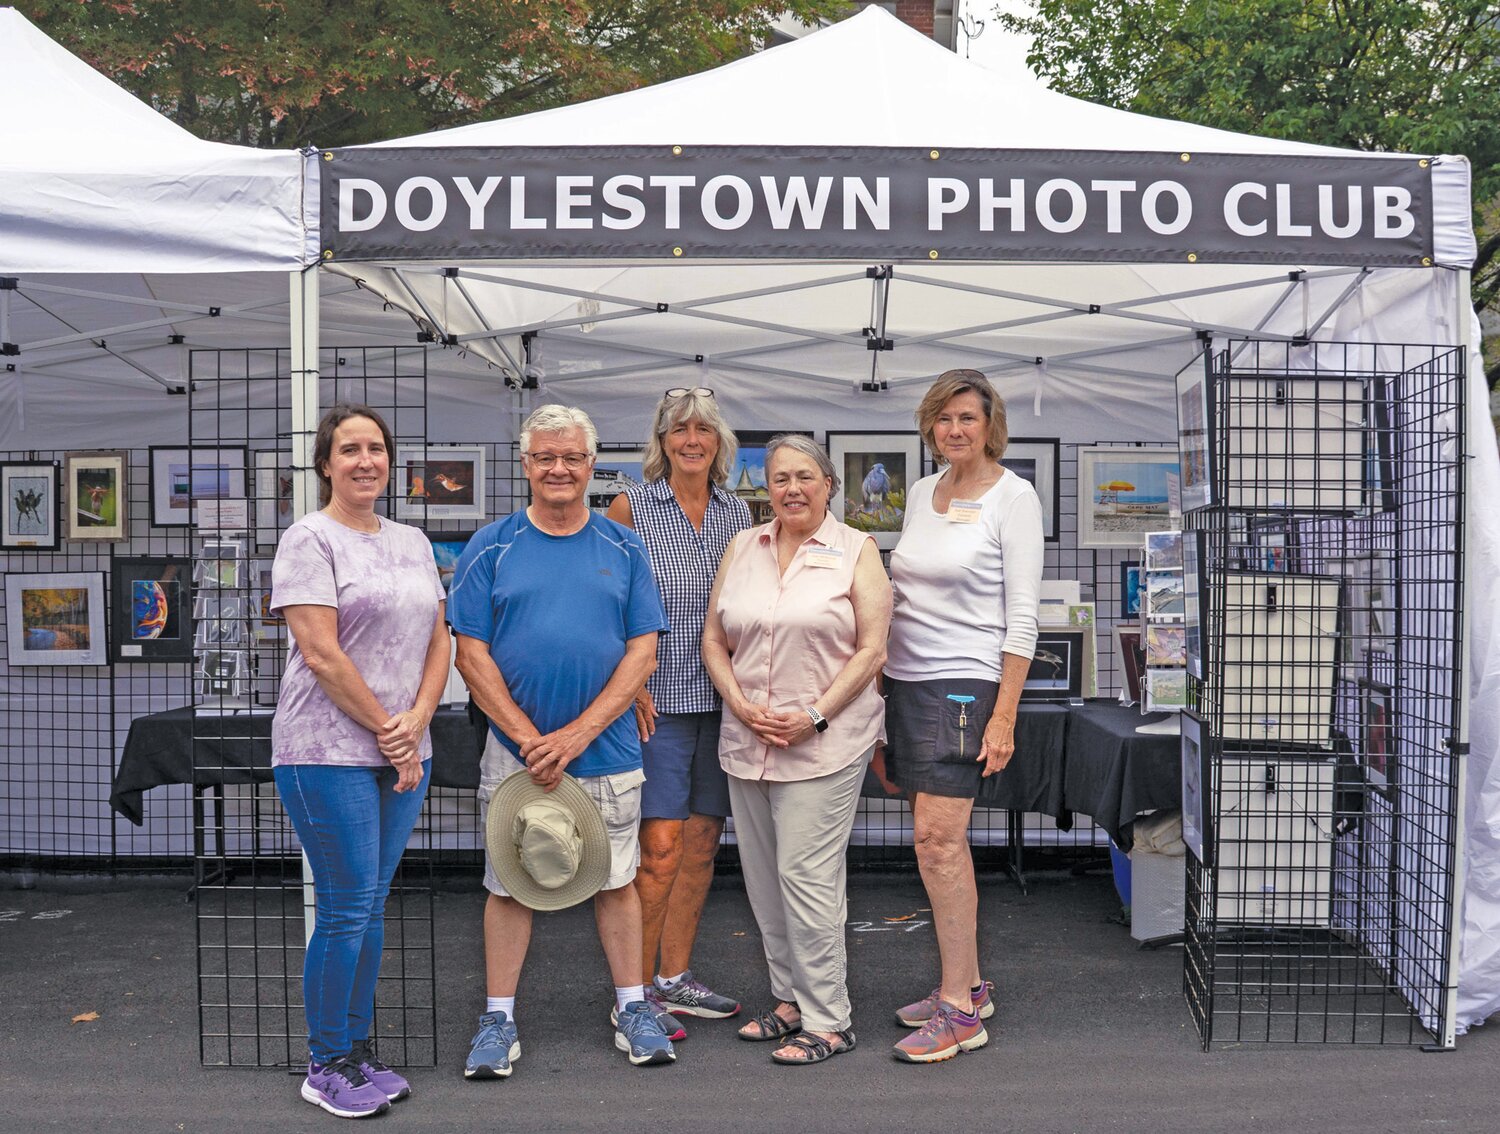 Amy Shaffer, Michael Tontoni, Cathy Sherman, Jean McKenna and Sue Sherman represent the Doylestown Photo Club at the Doylestown Arts Festival Saturday.